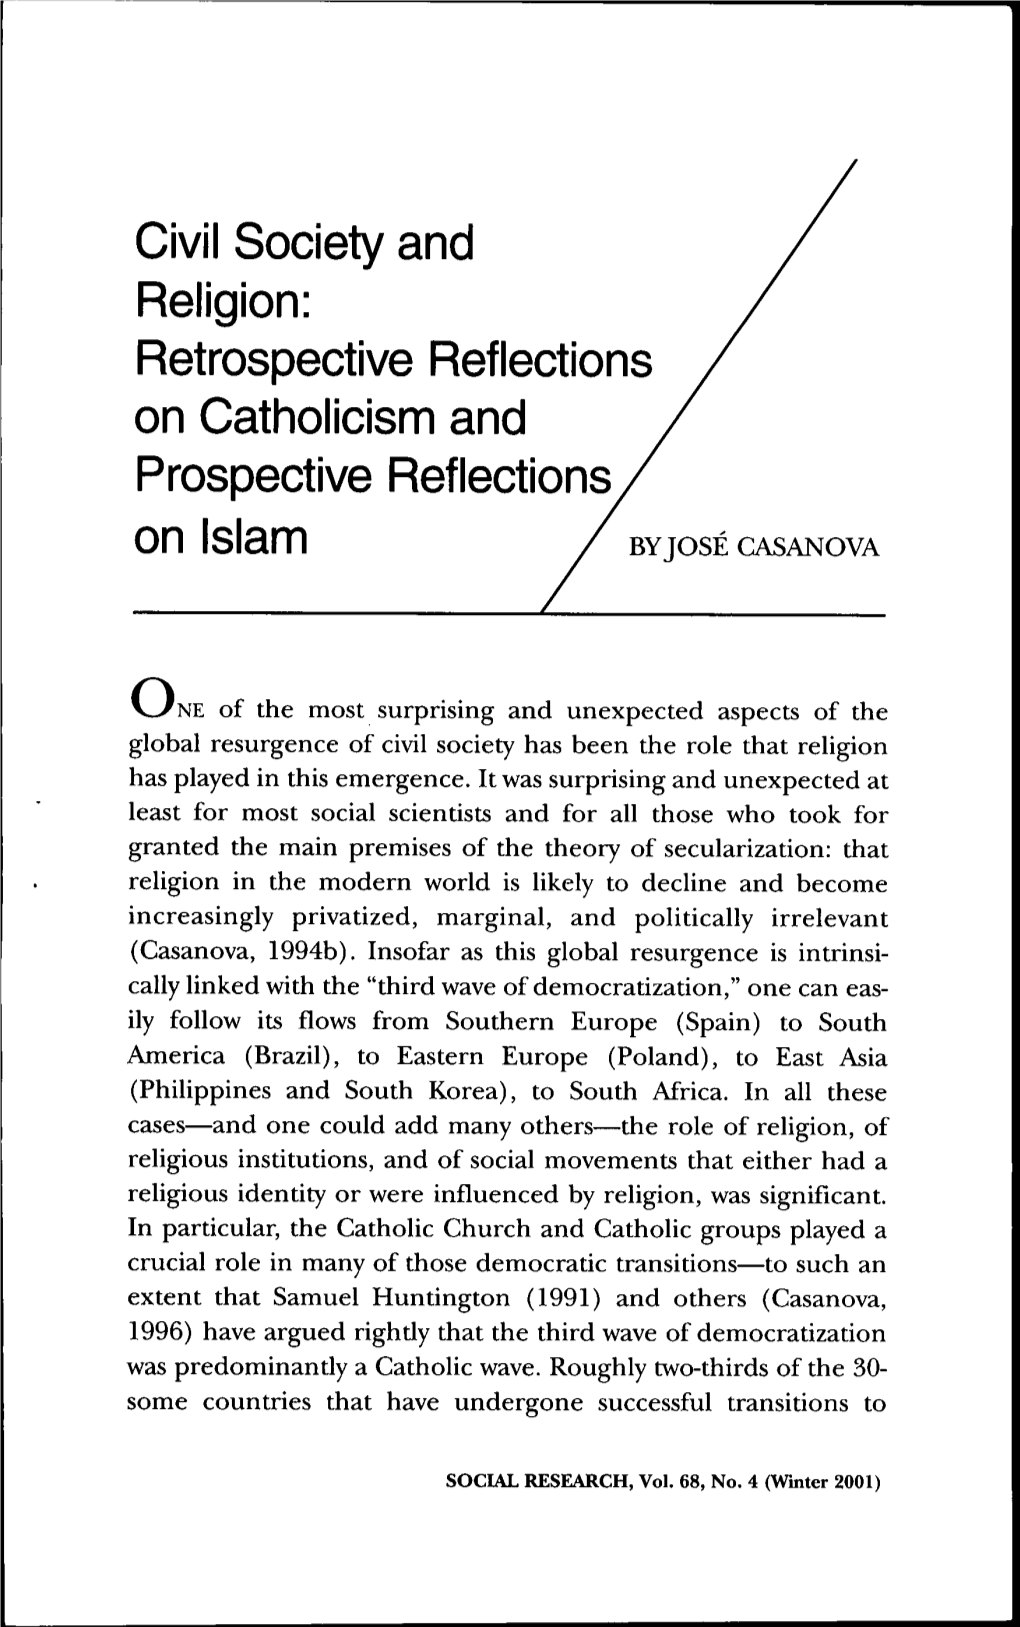 Civil Society and Religion: Retrospective Reflections on Catholicism and Prospective Reflections on Islam / BYJOSE CASANOVA